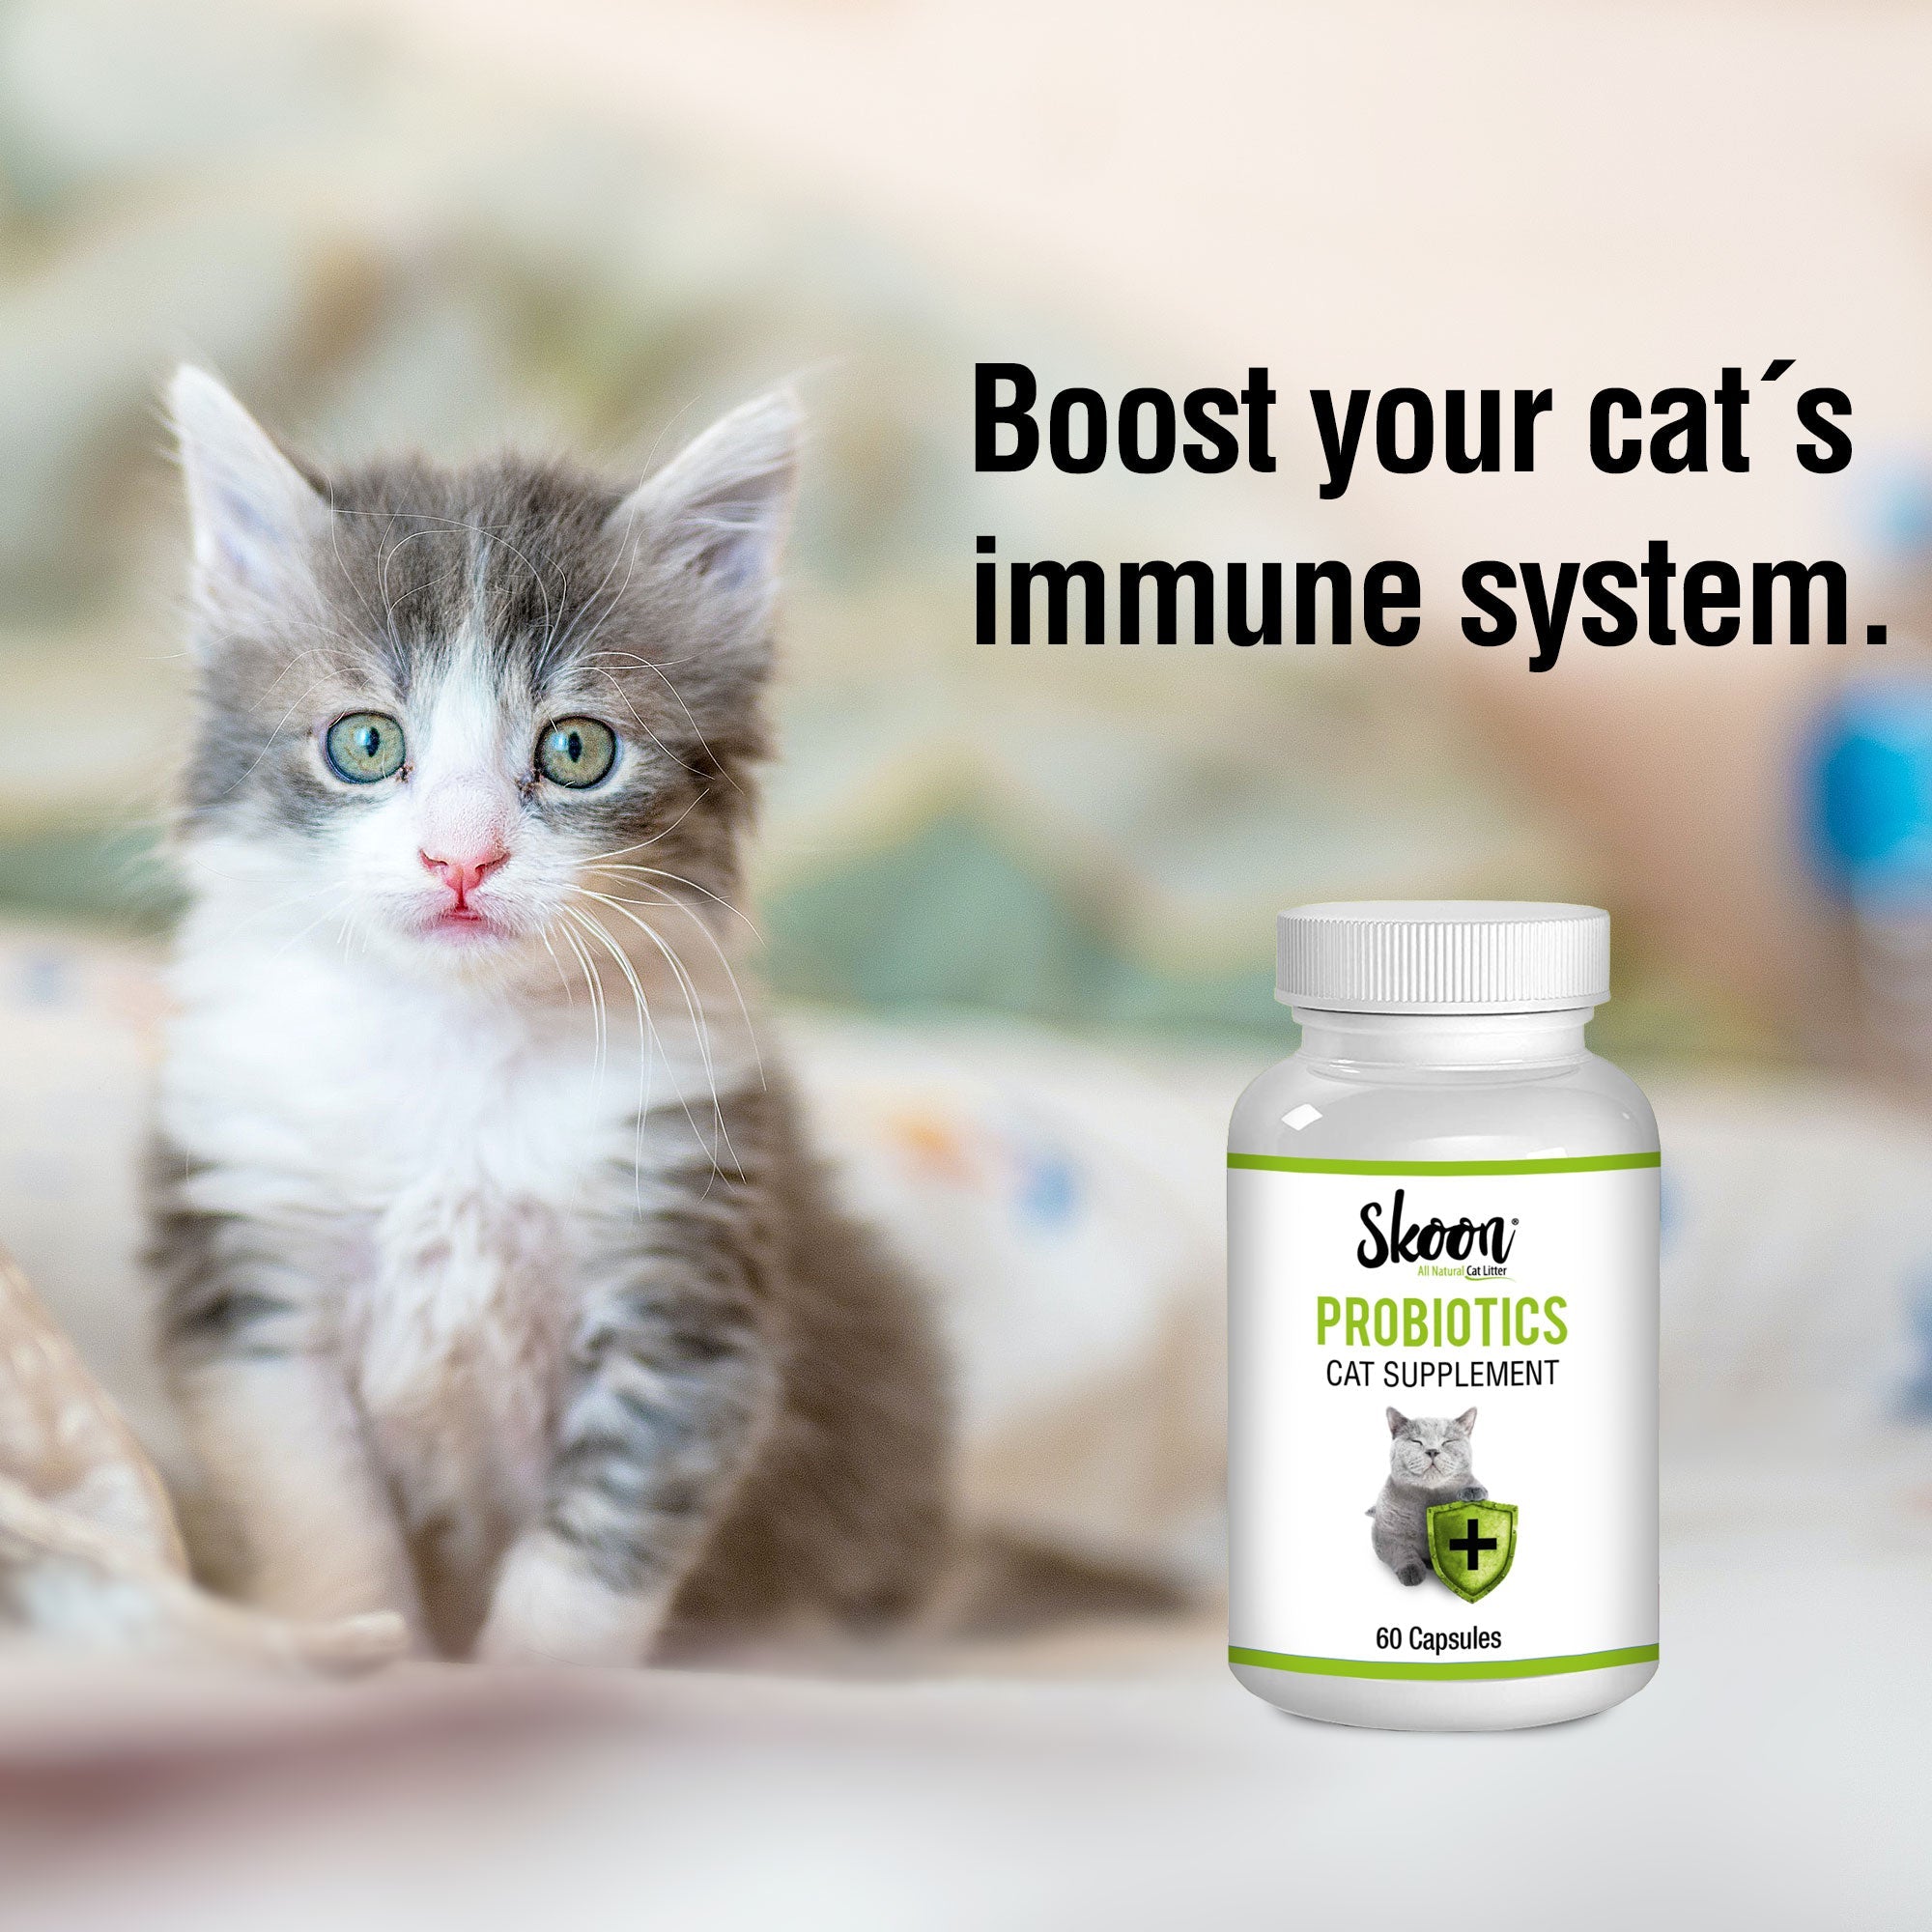 Skoon Cat Probiotics Subscription